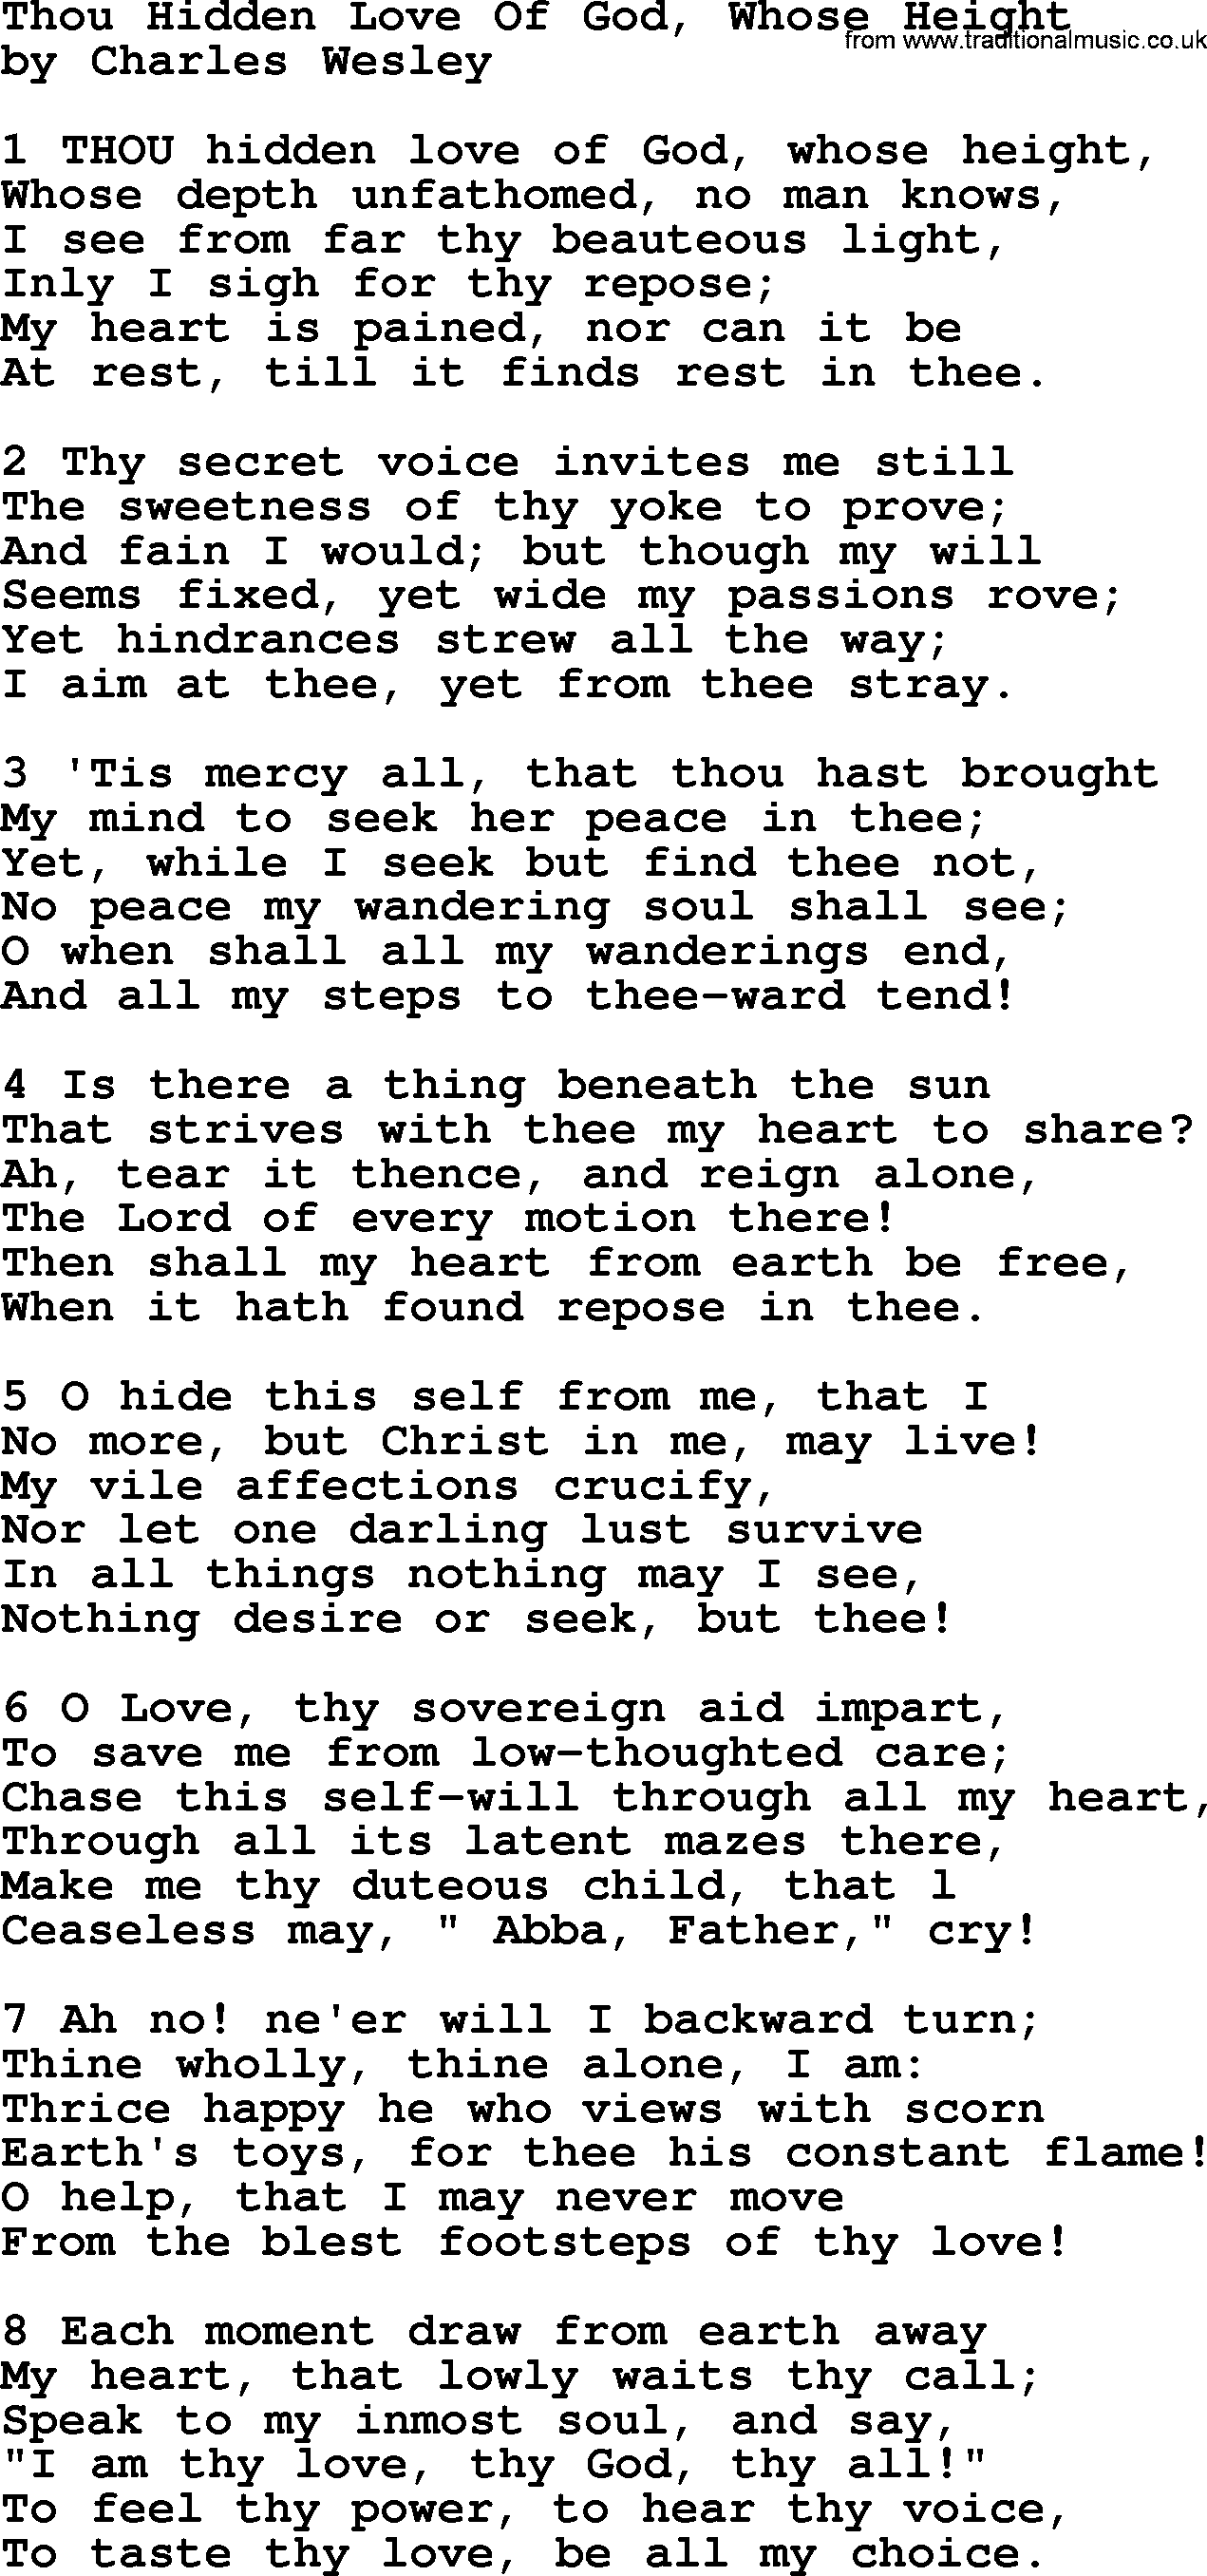 Charles Wesley hymn: Thou Hidden Love Of God, Whose Height, lyrics